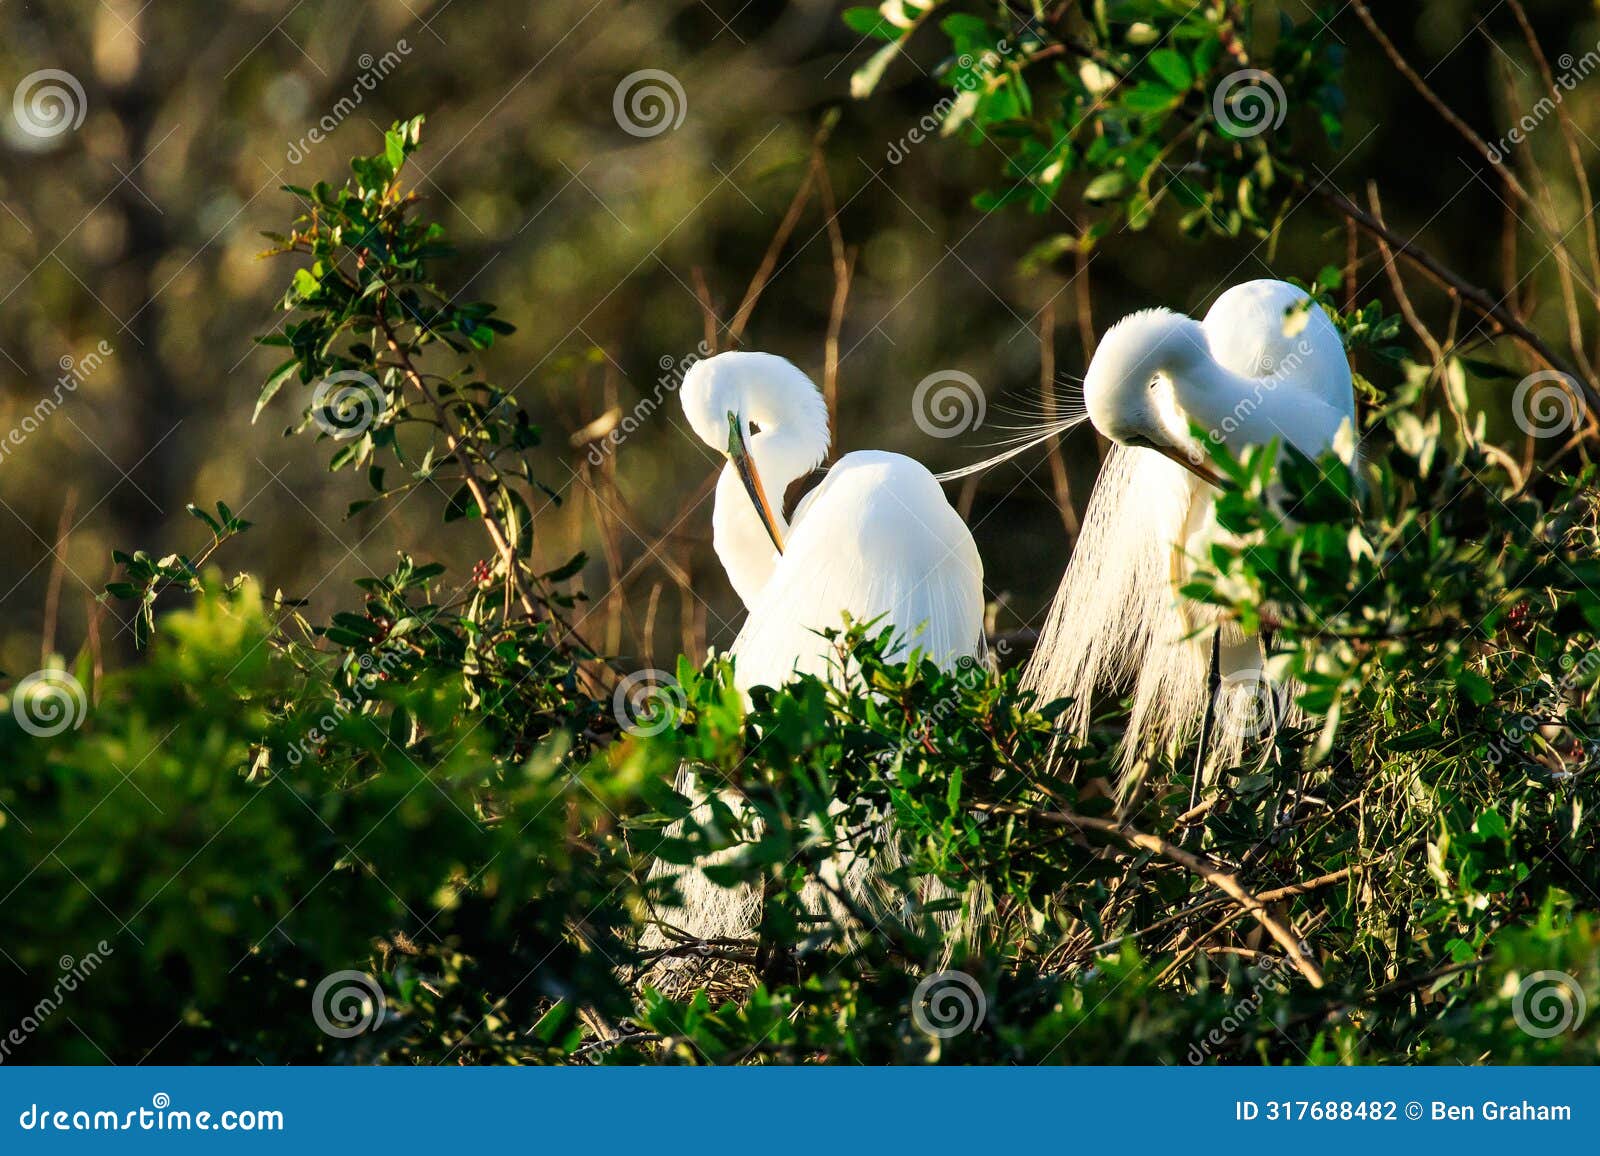 great egrets preening venice rookery